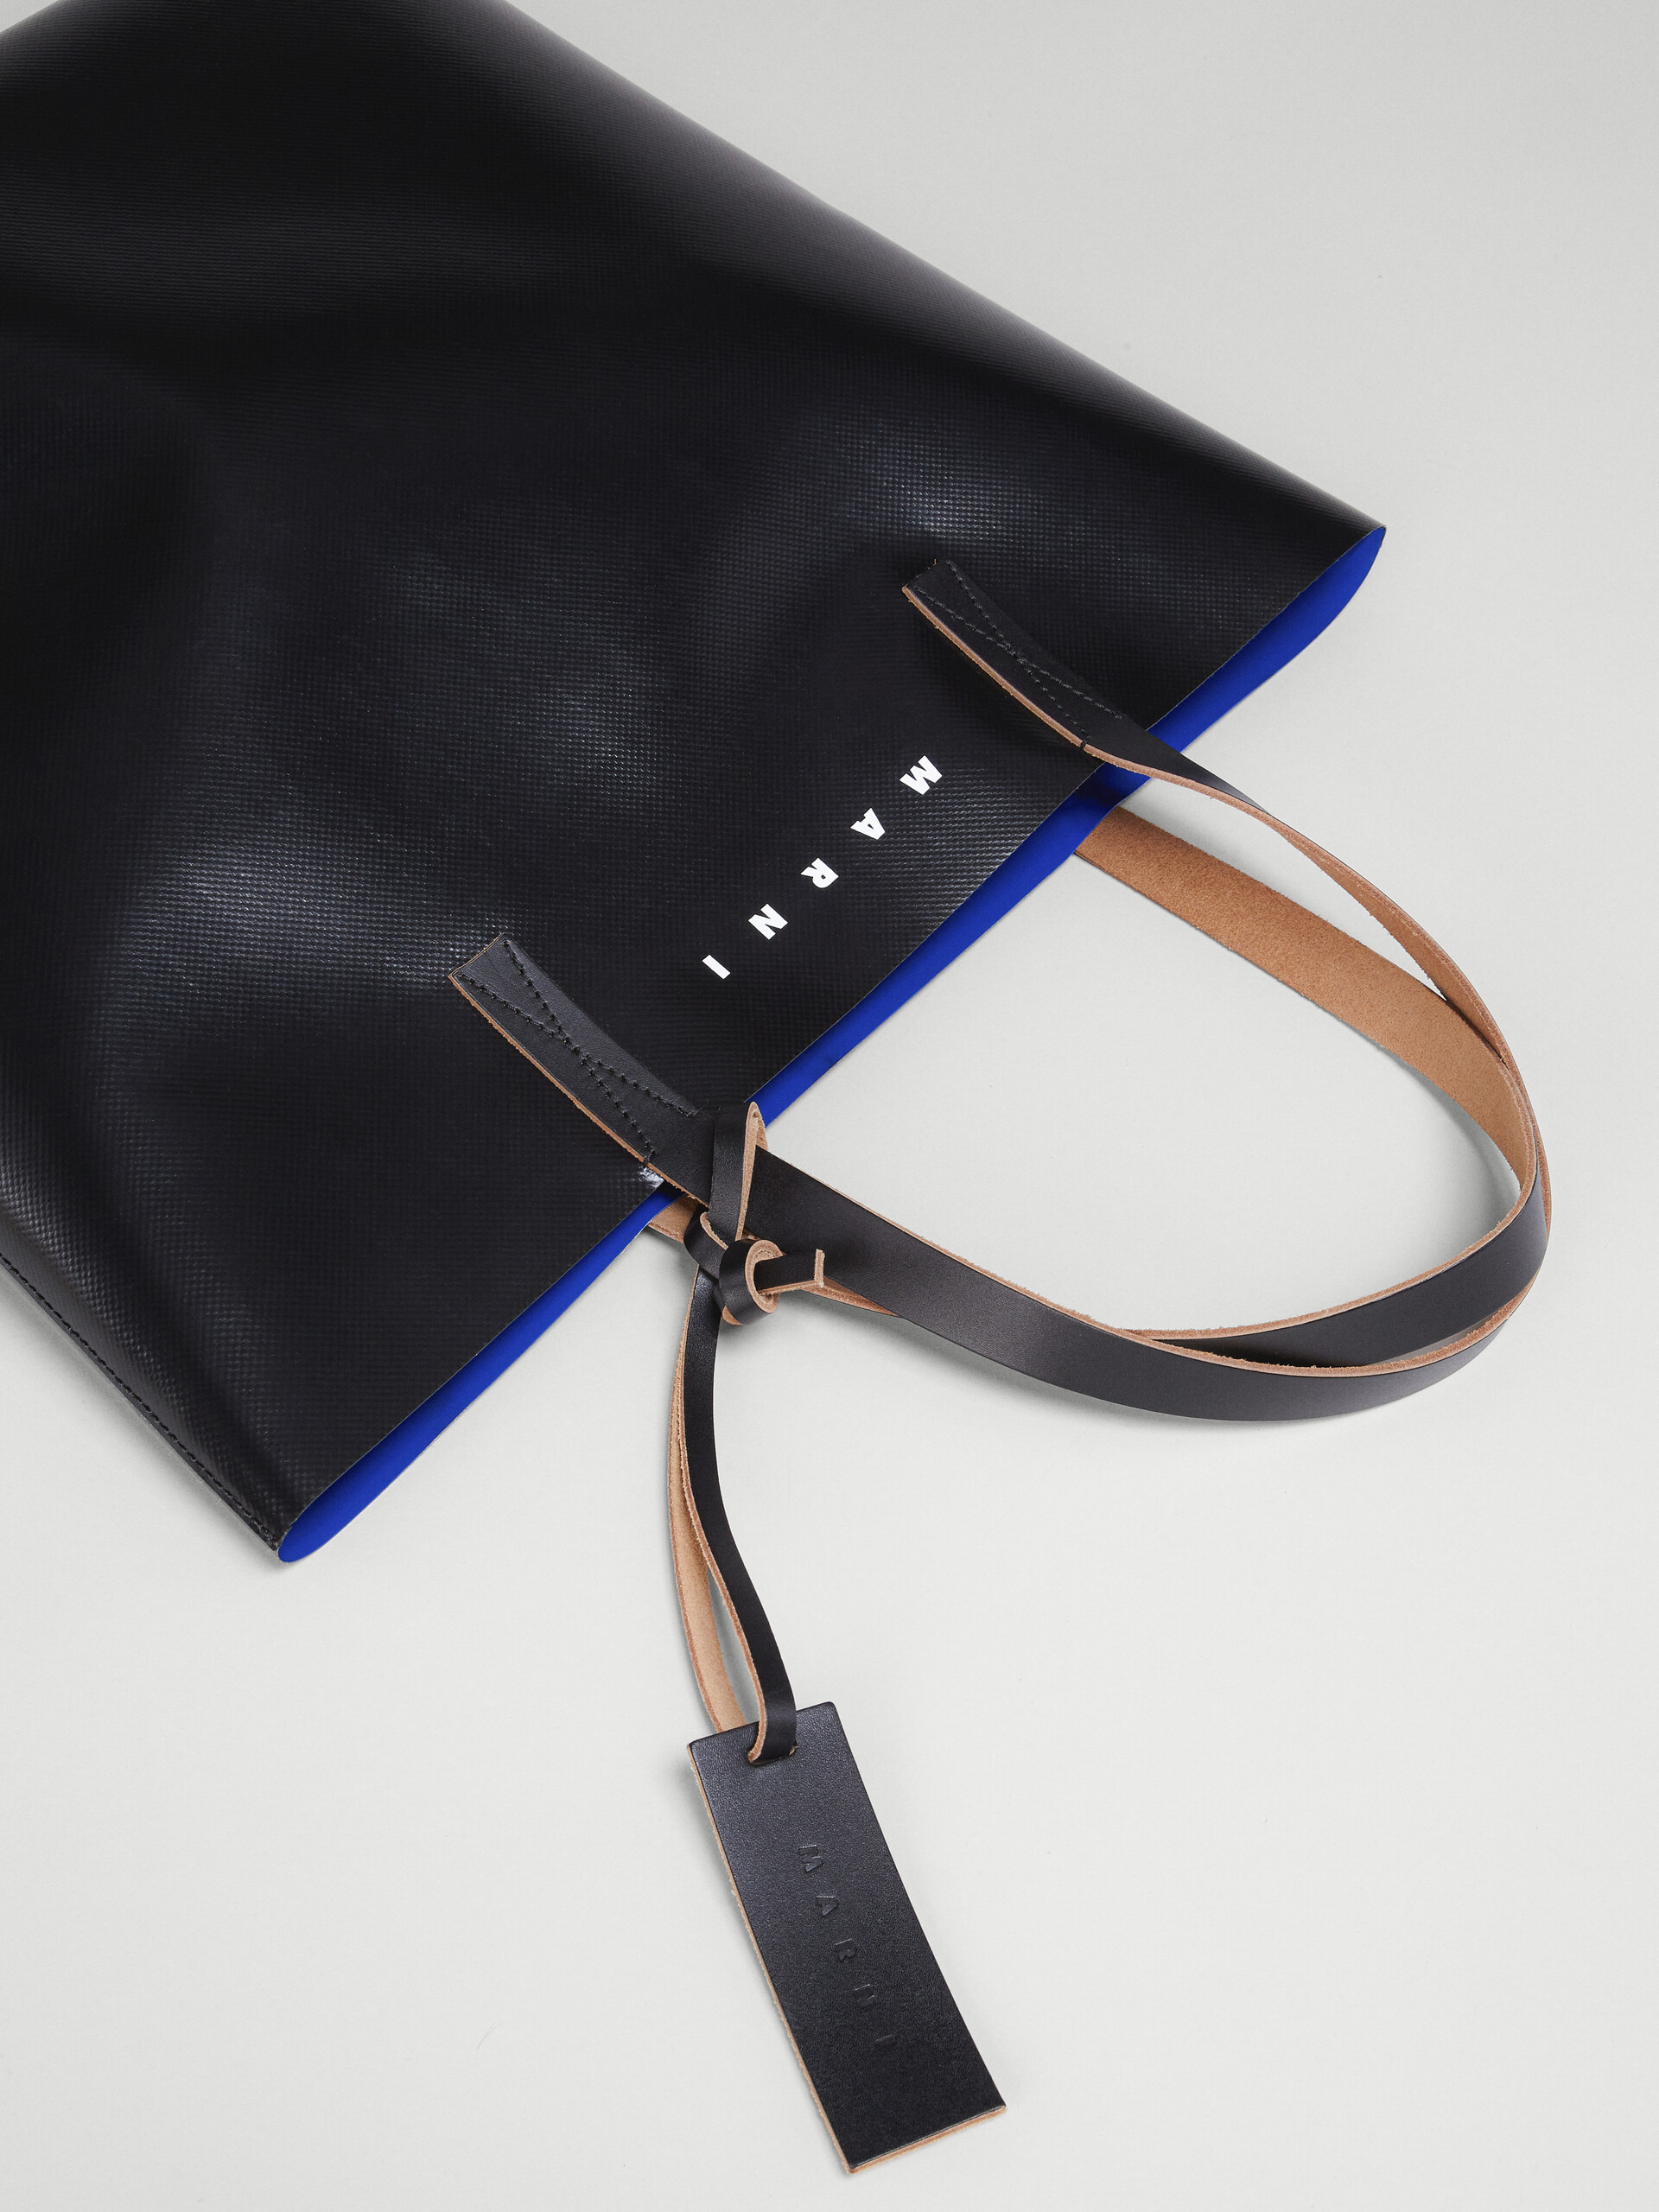 Black and blue TRIBECA PVC shopping bag - Shopping Bags - Image 4